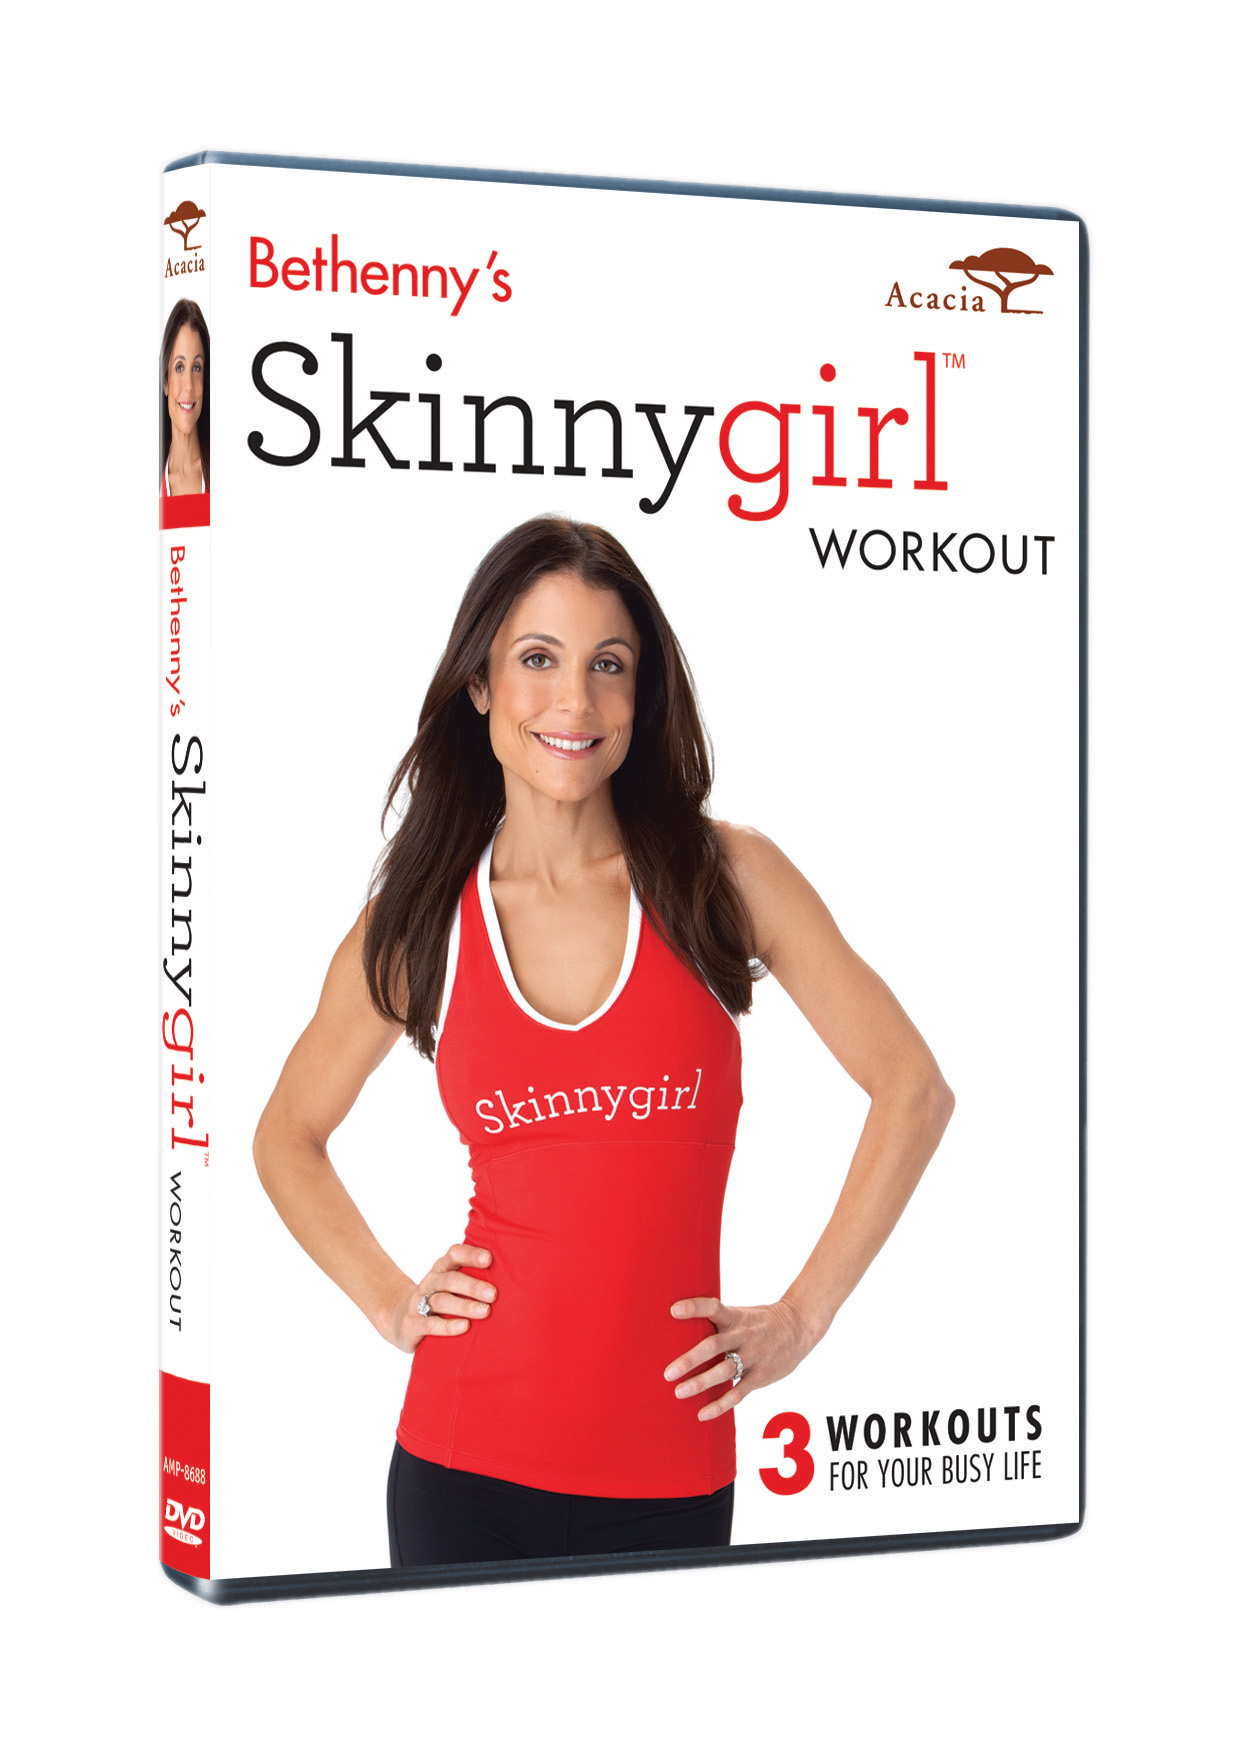 https://fitnesstestdrive.com///wp-content/uploads/2011/09/Bethennys-Skinnygirl-Workout_DVD-Cover.jpg